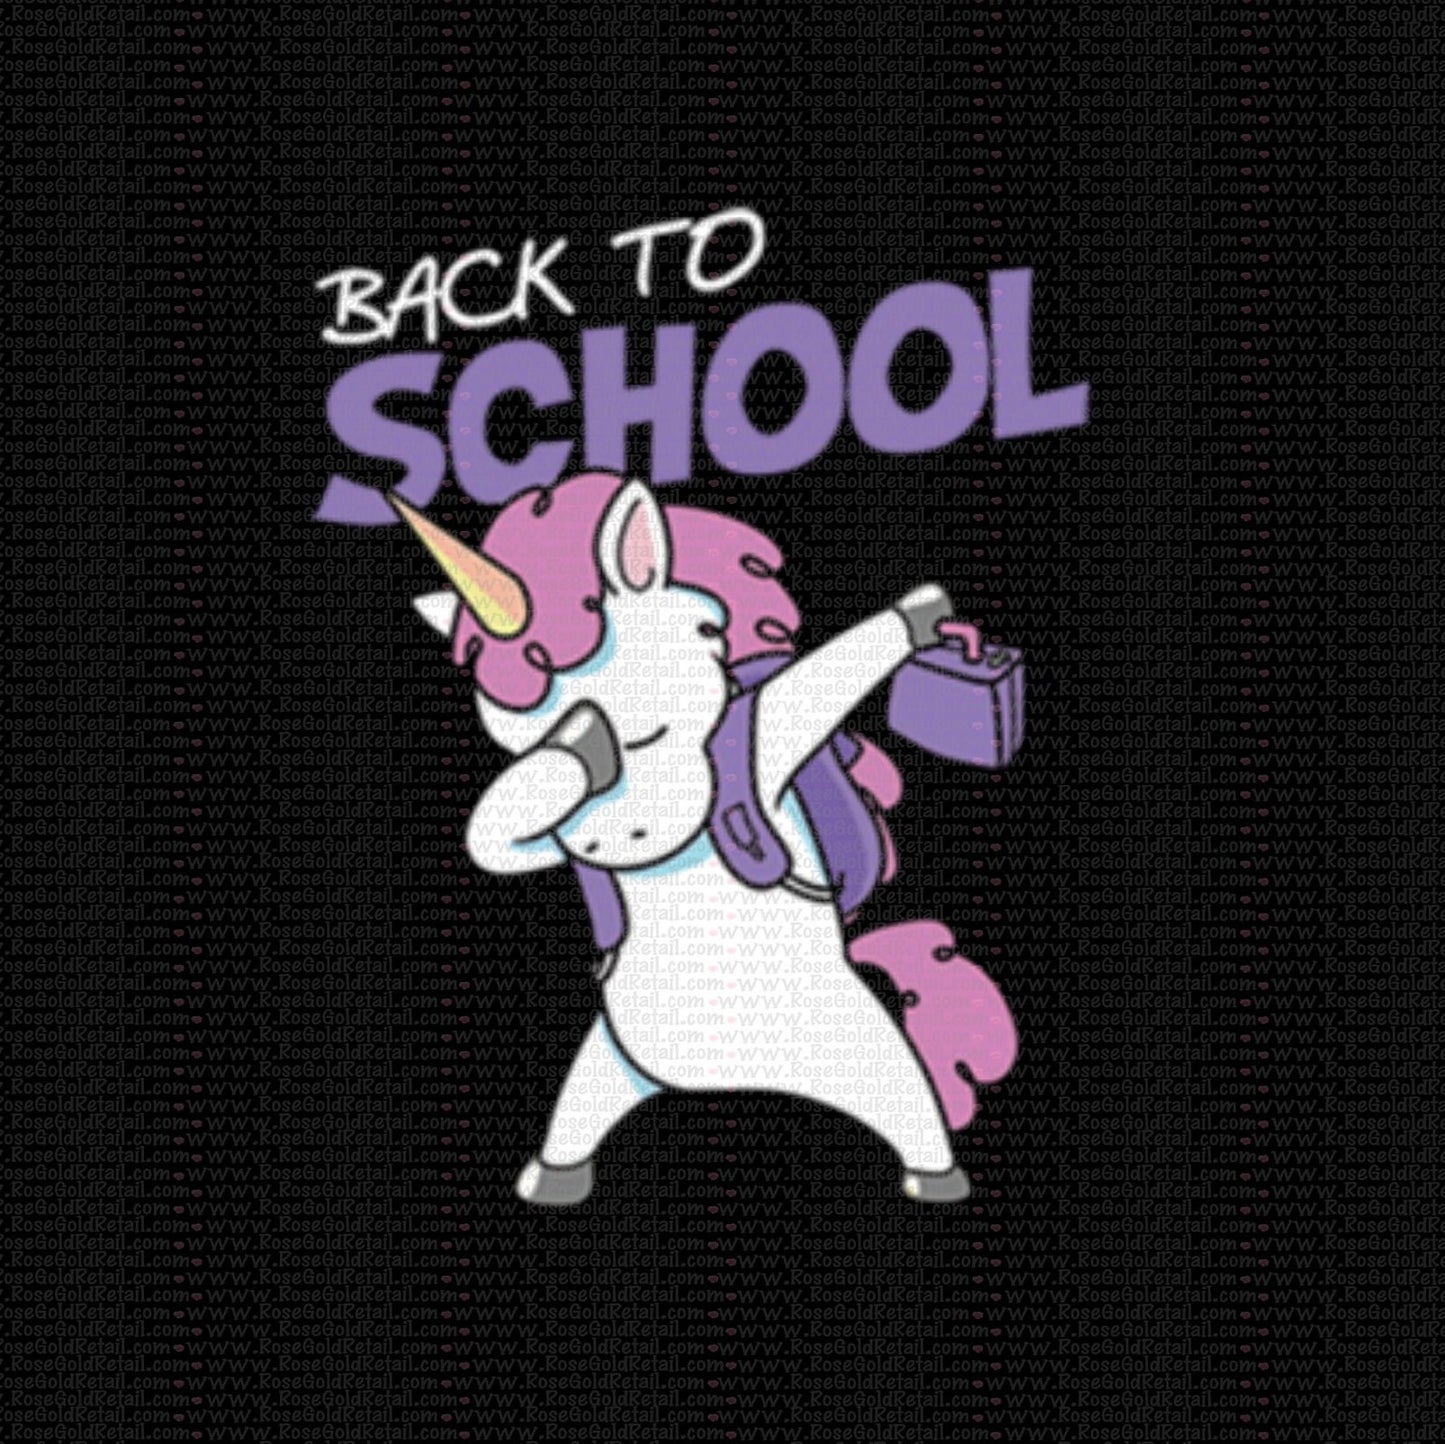 Back to school - Kids- Unicorn Design - Ready to Press - Ready to Ship Screen Print for Kids